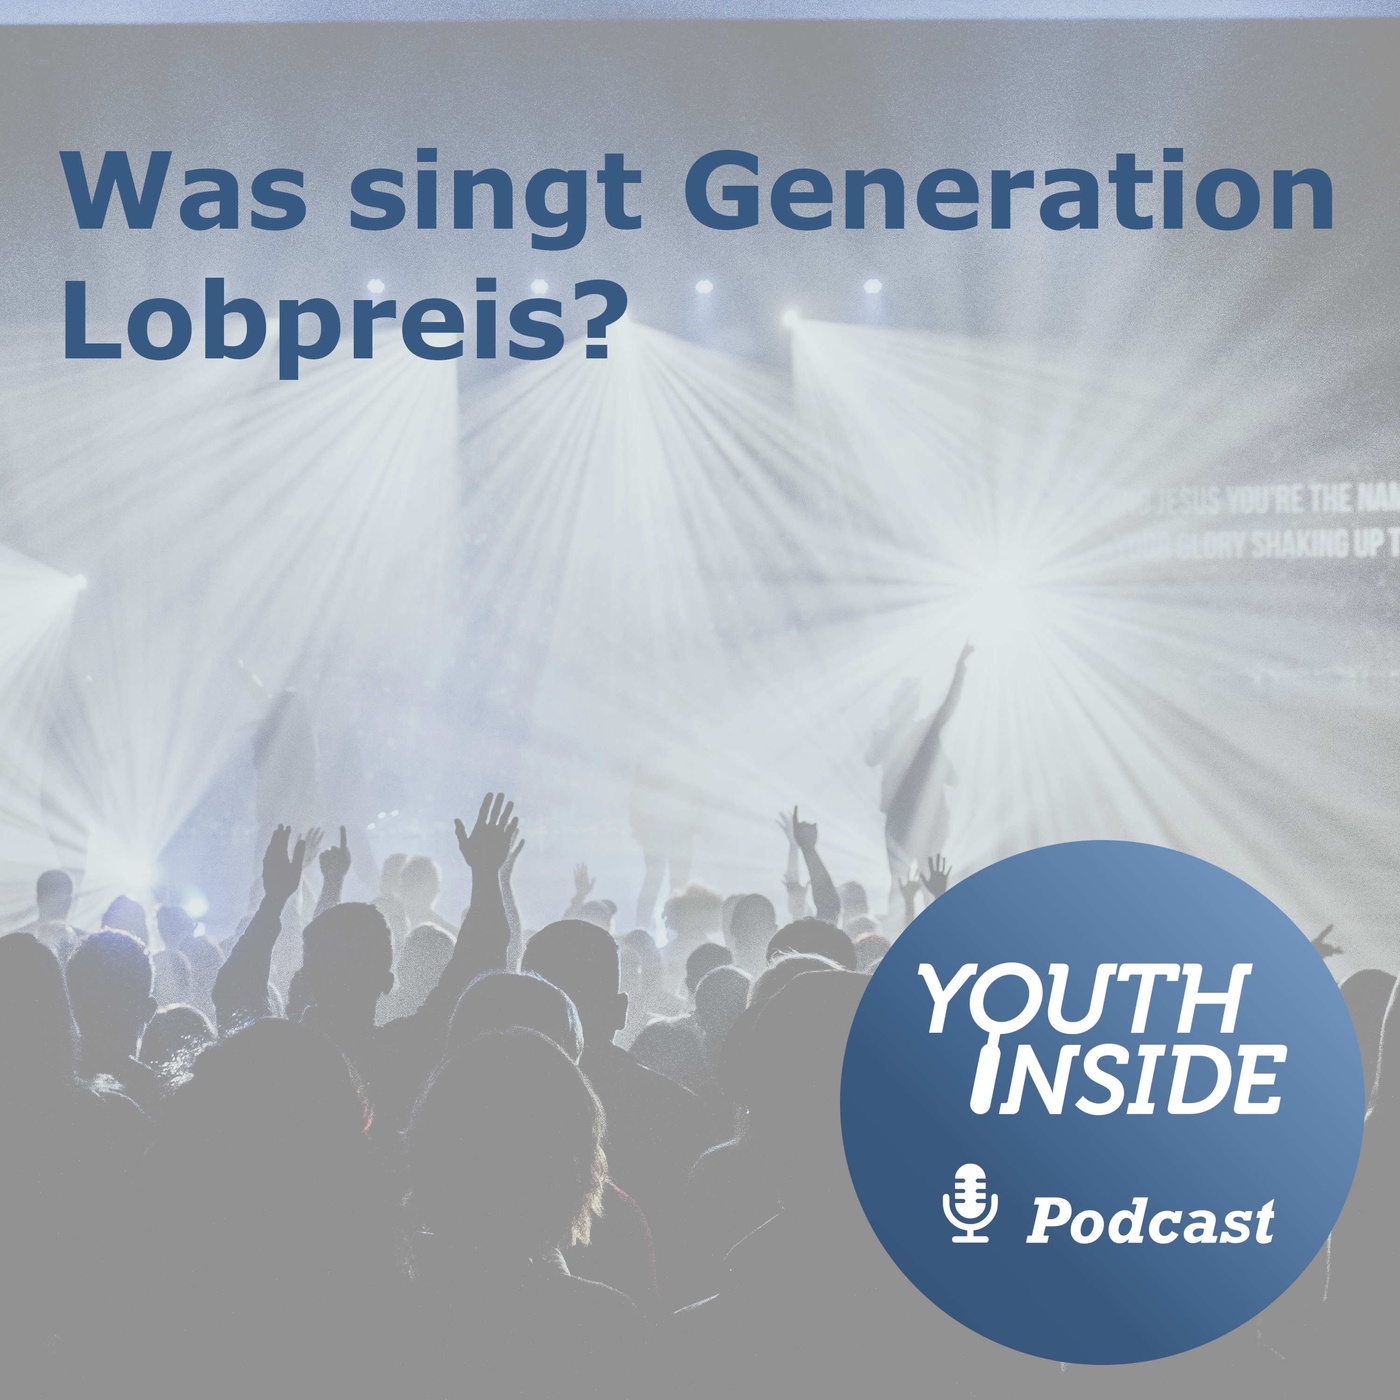 Was singt Generation Lobpreis?